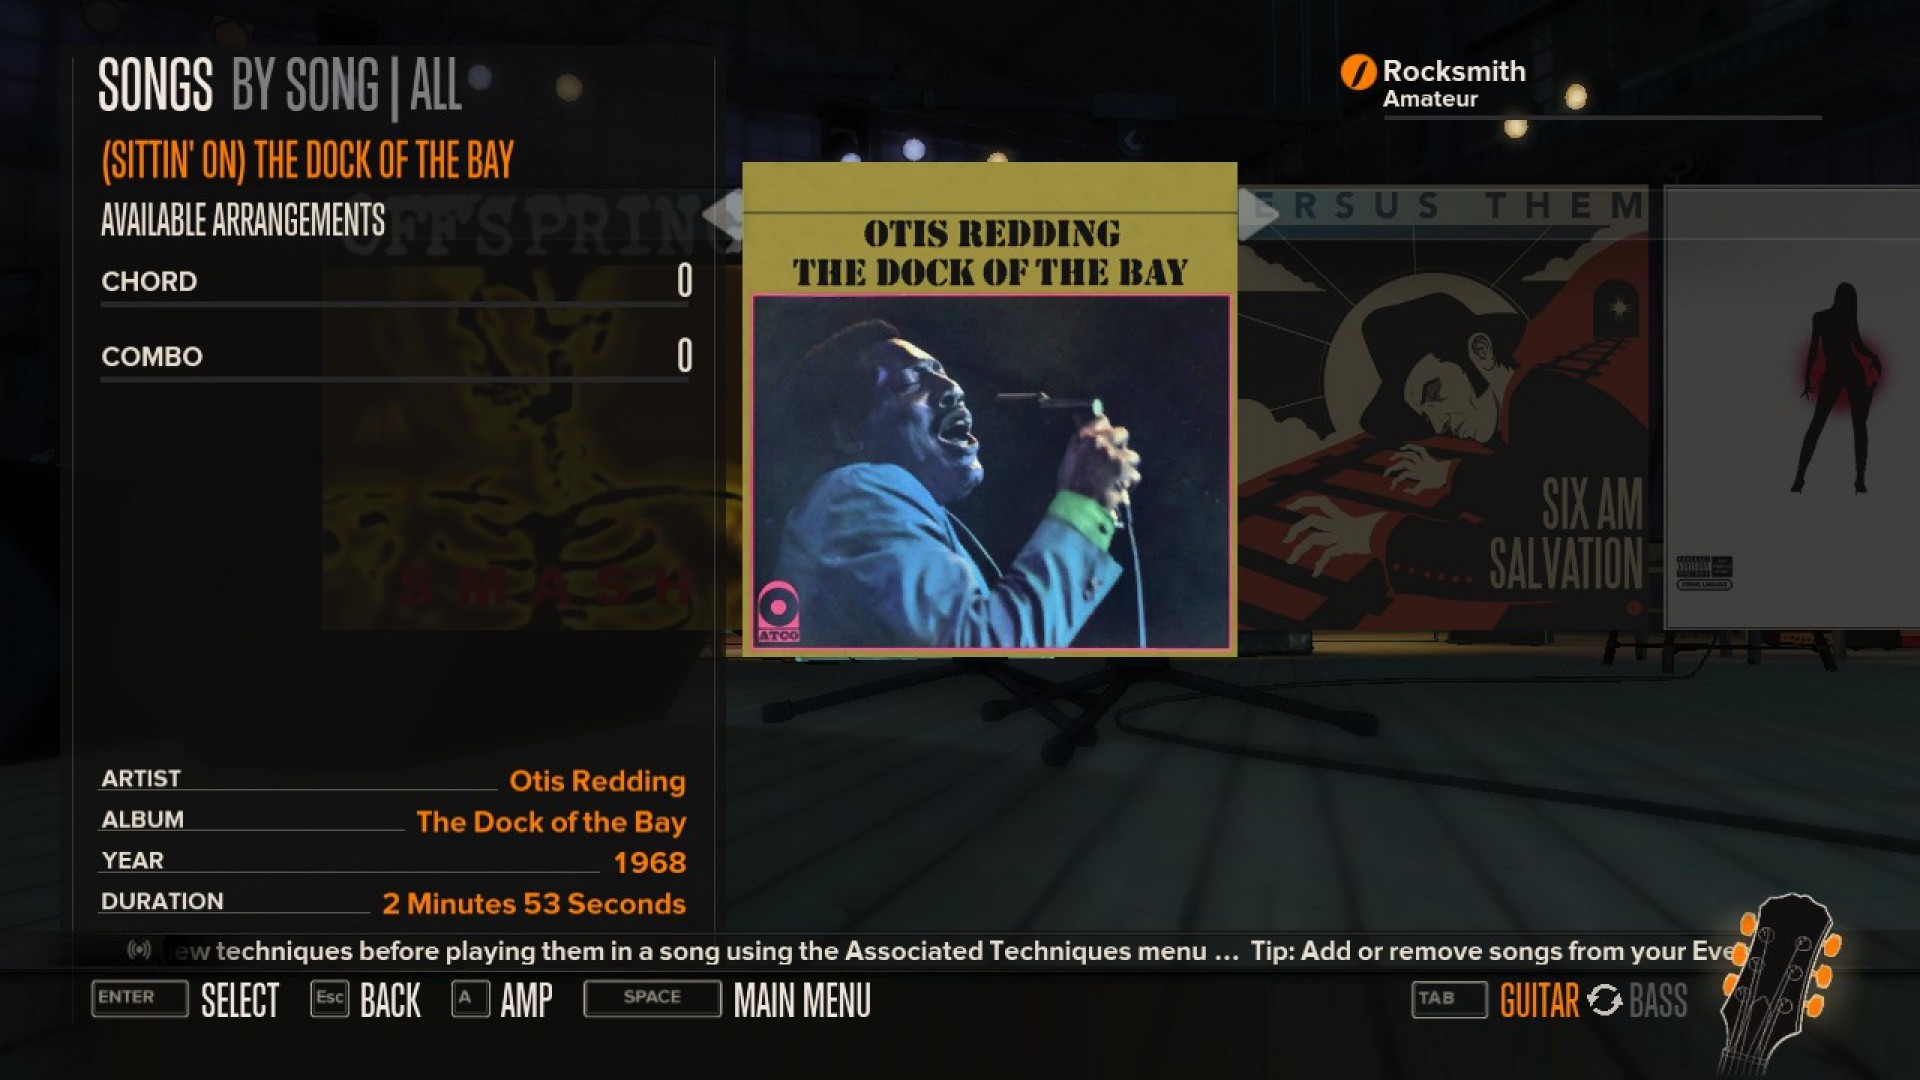 Rocksmith - Otis Redding - (Sittin' On) The Dock of the Bay screenshot